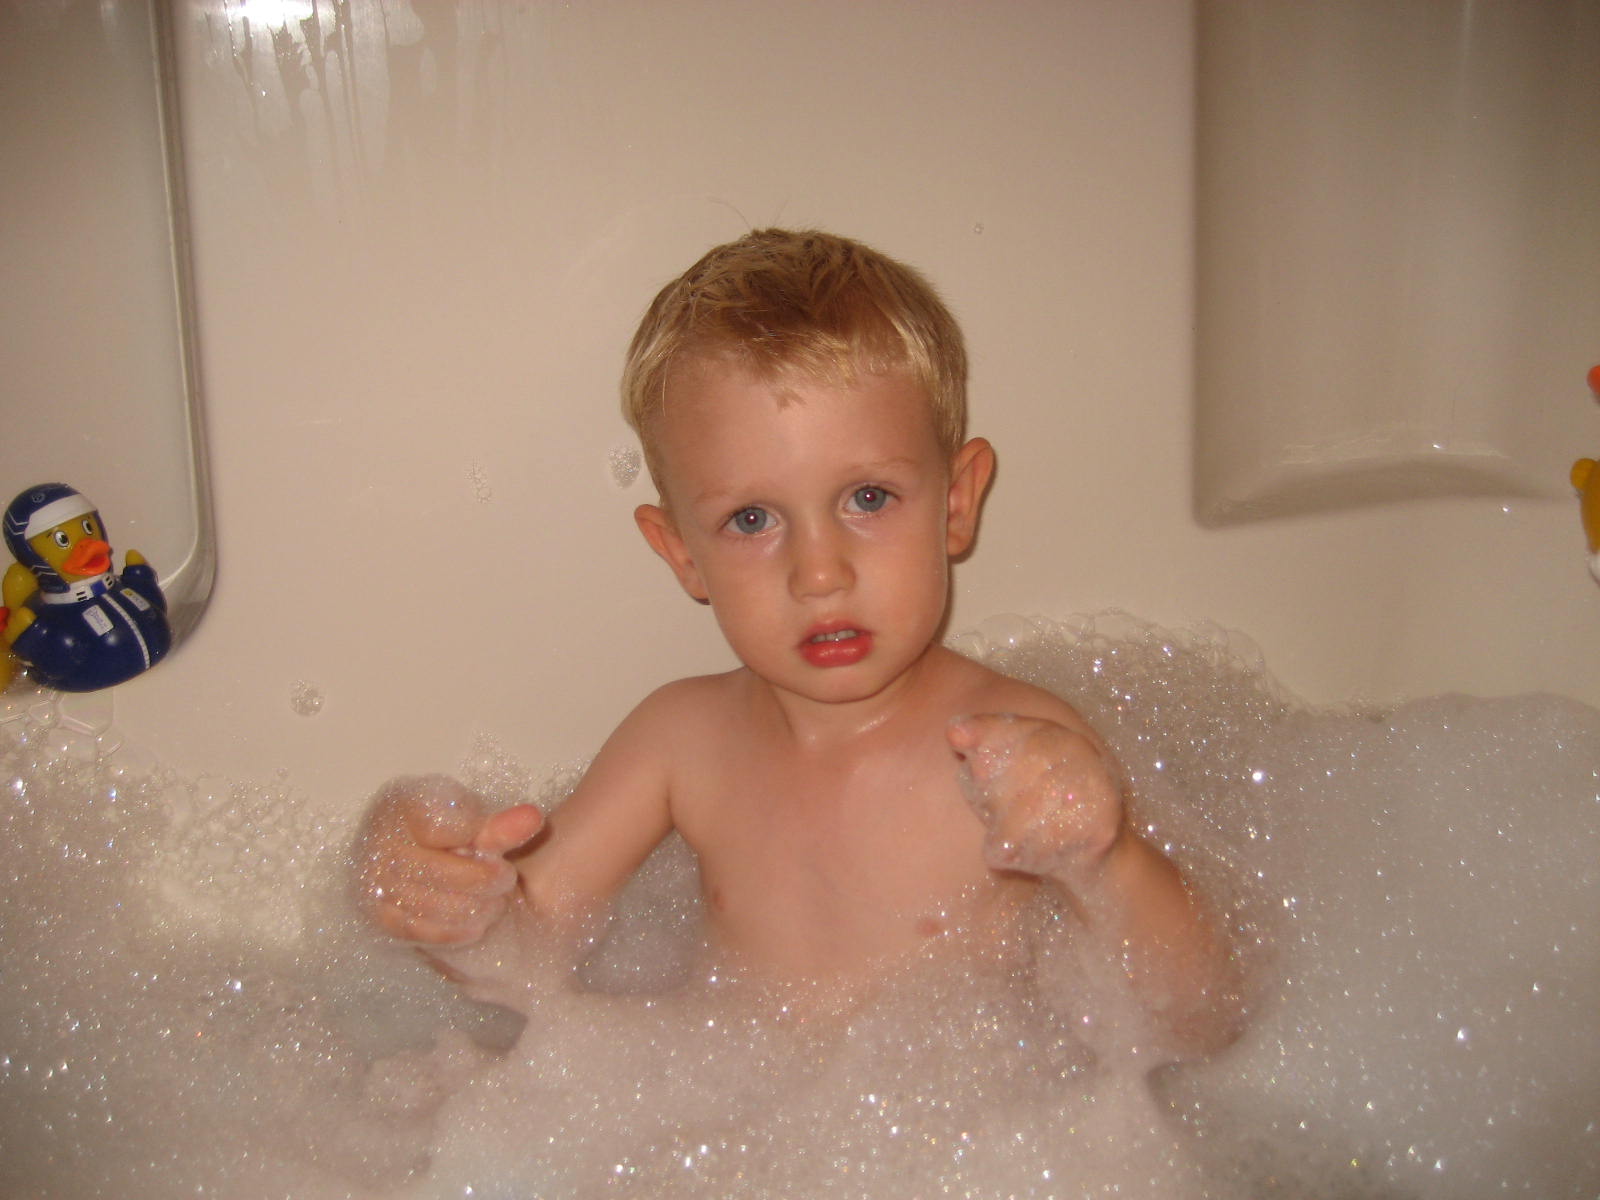 [Ryan+and+his+bubble+bath+003.jpg]